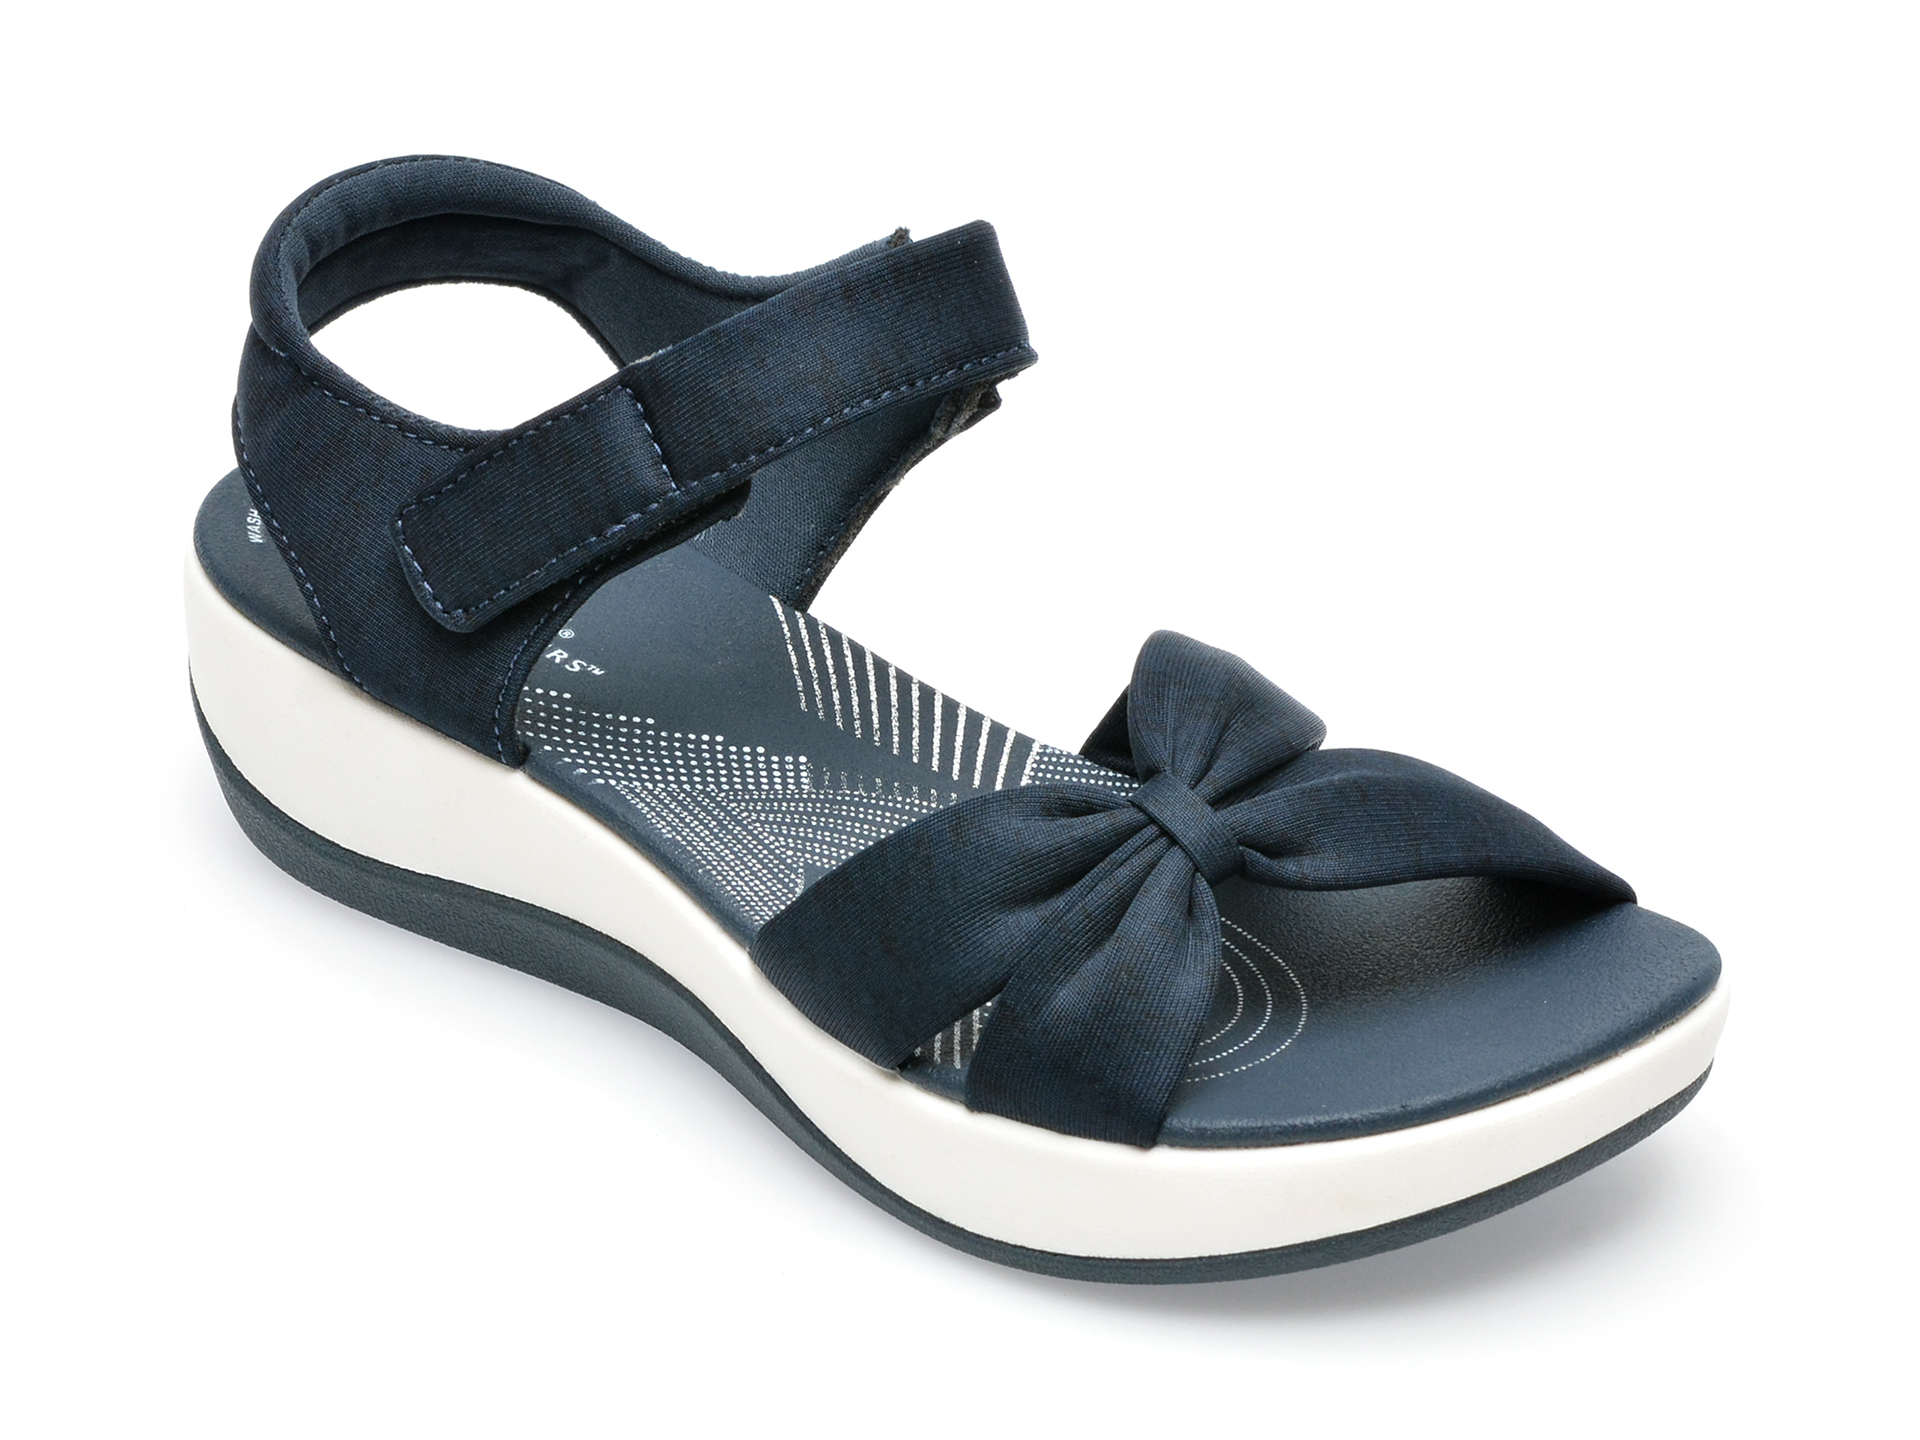 Sandale CLARKS bleumarin, ARLA SHORE 0912, din material textil Clarks